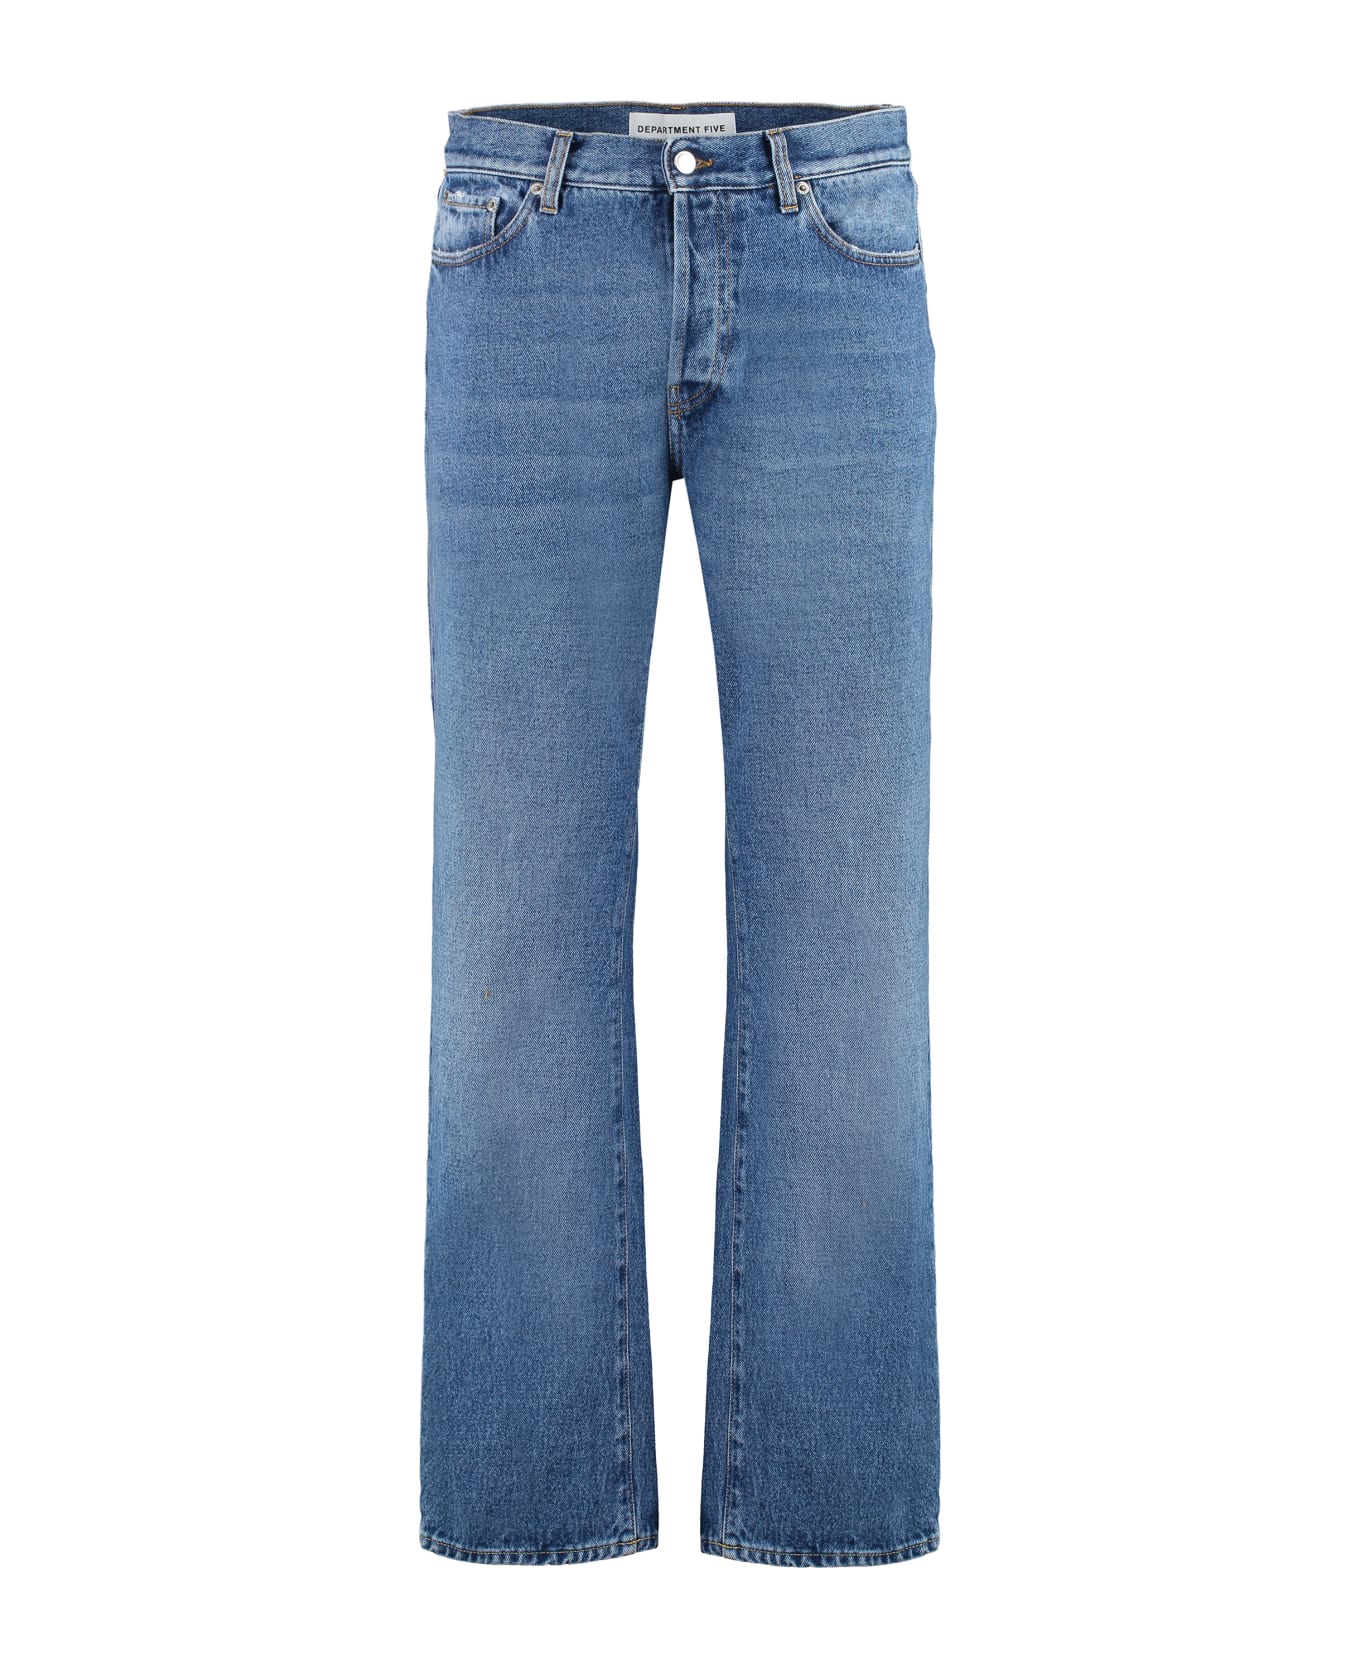 Department Five Bowl Jeans 5-pocket Straight-leg Jeans - Denim